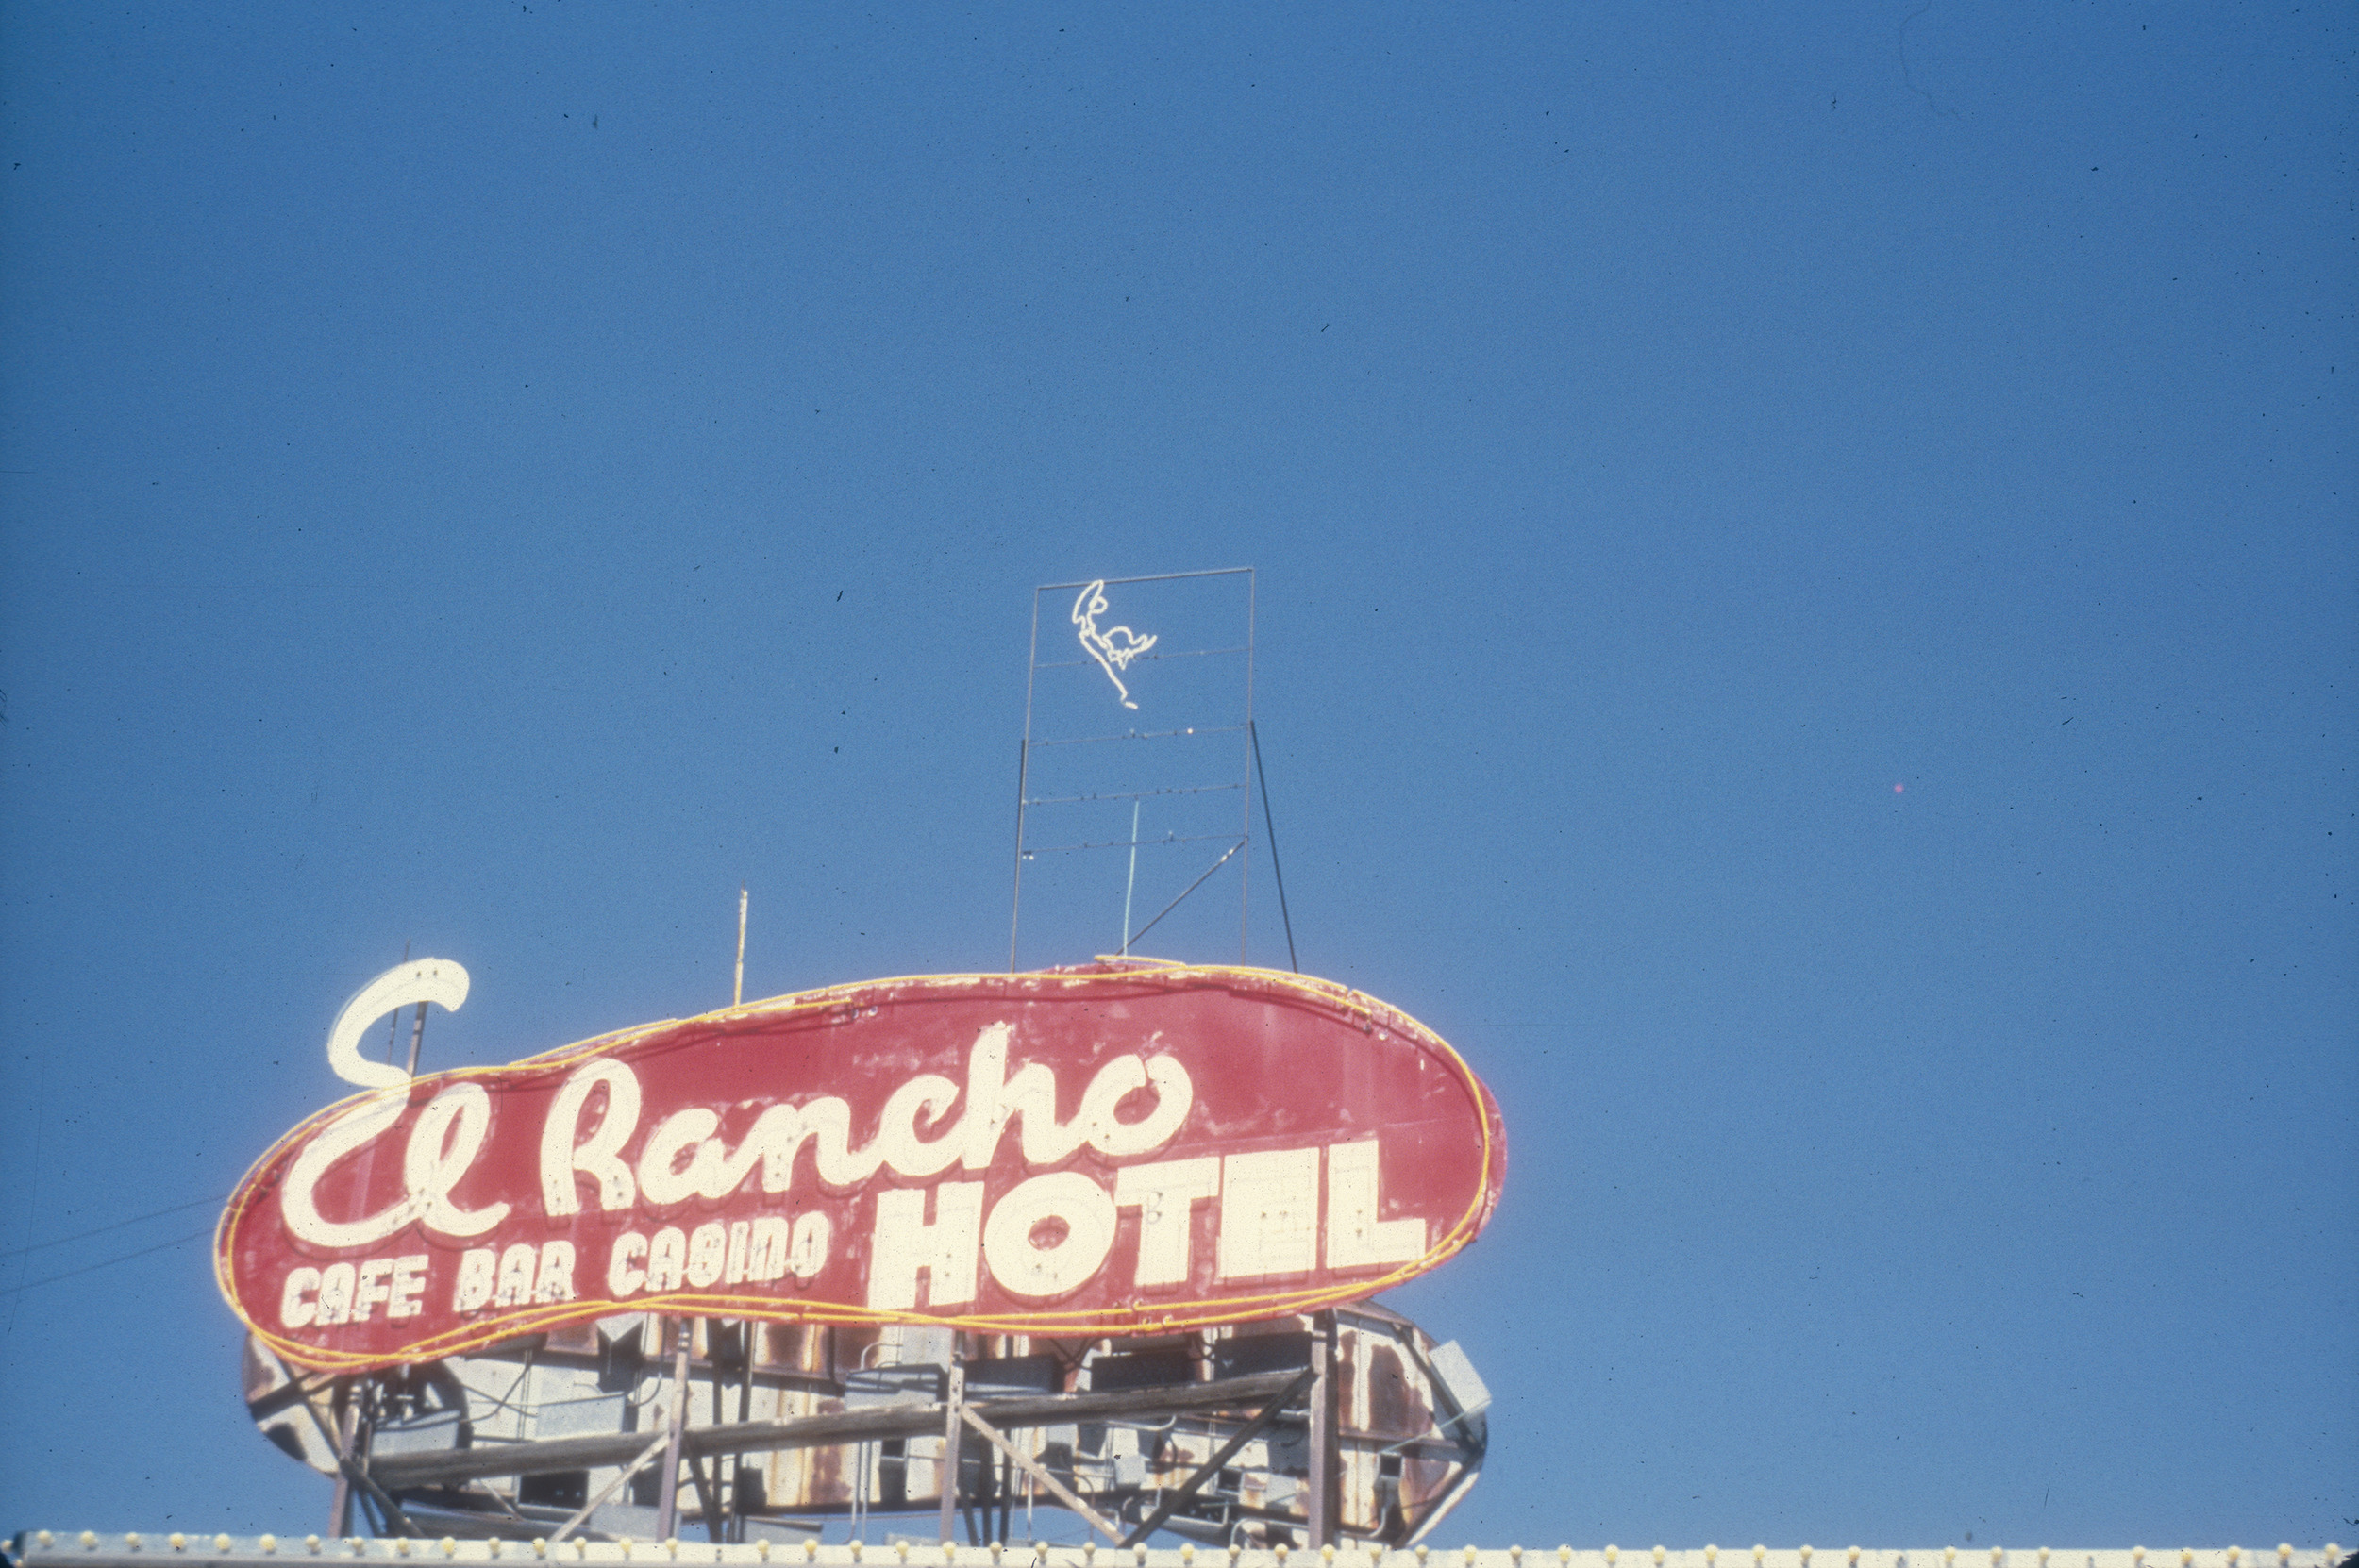 Slide of El Rancho Hotel, Wells, Nevada, 1986